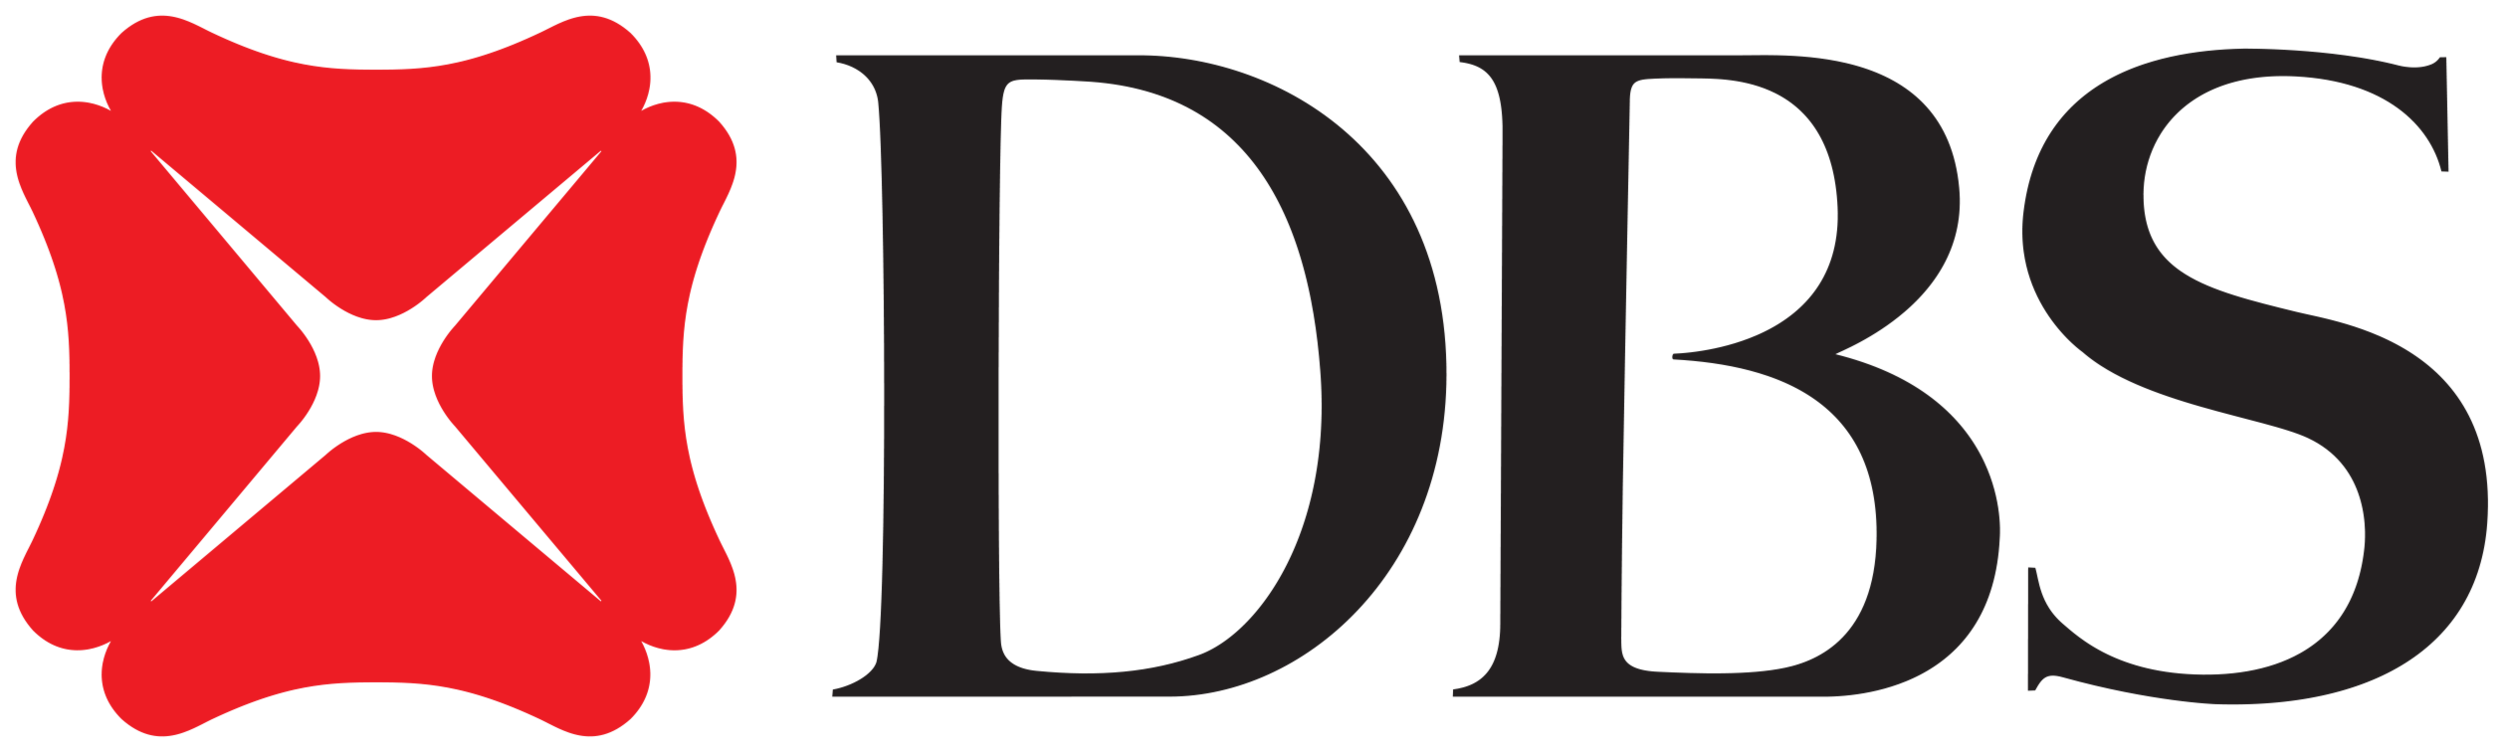 DBS-logo.png